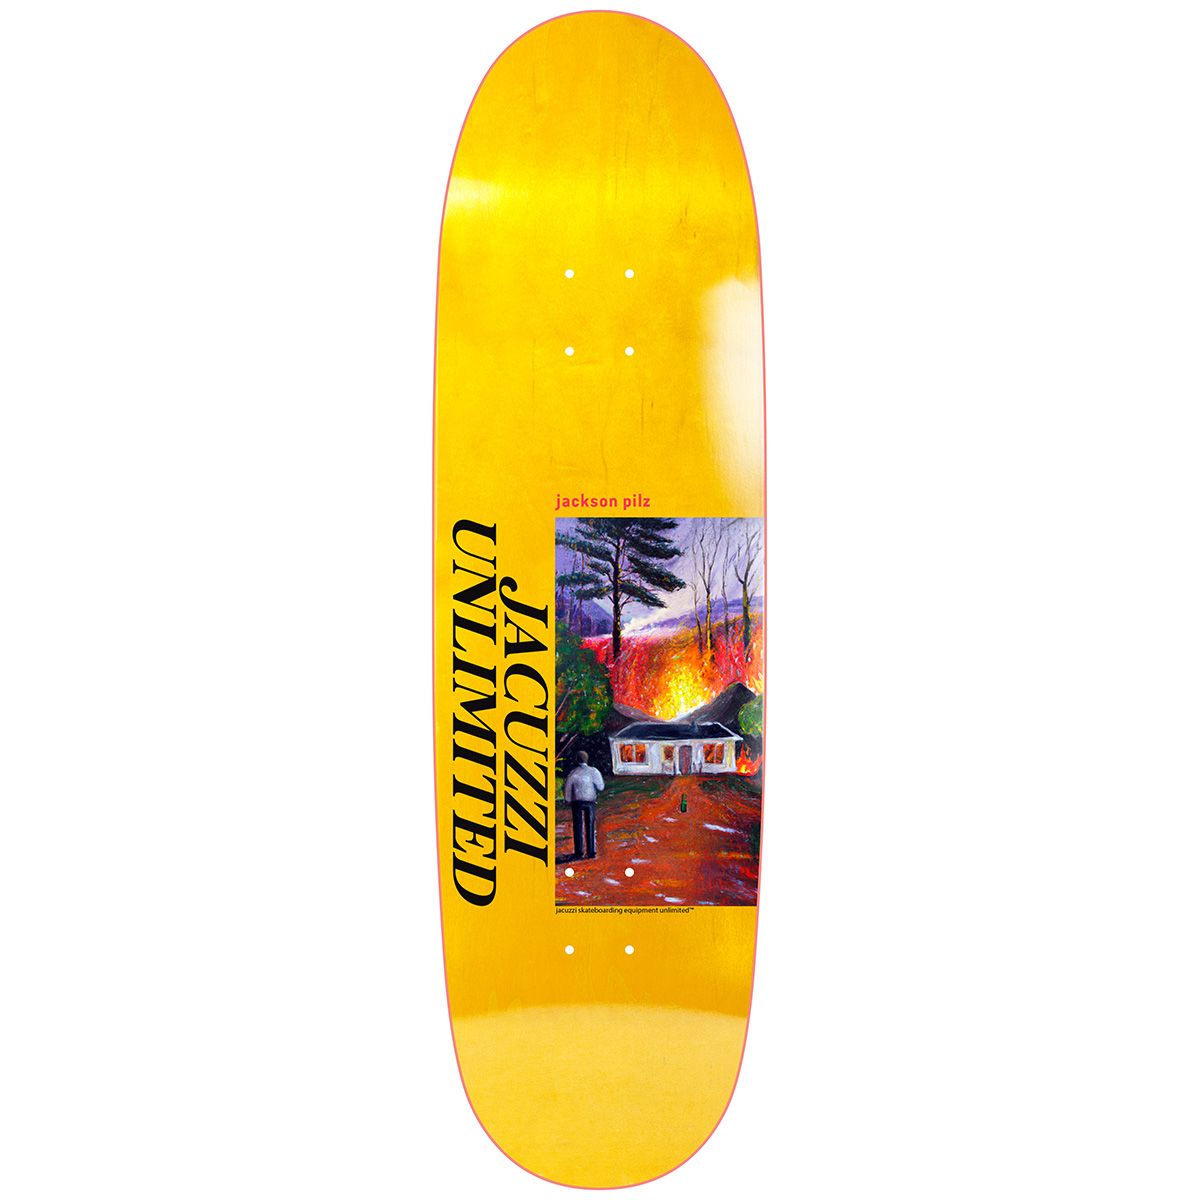 Jacuzzi Jackson Pilz Lawn Fire Skateboard Deck Yellow 9.125